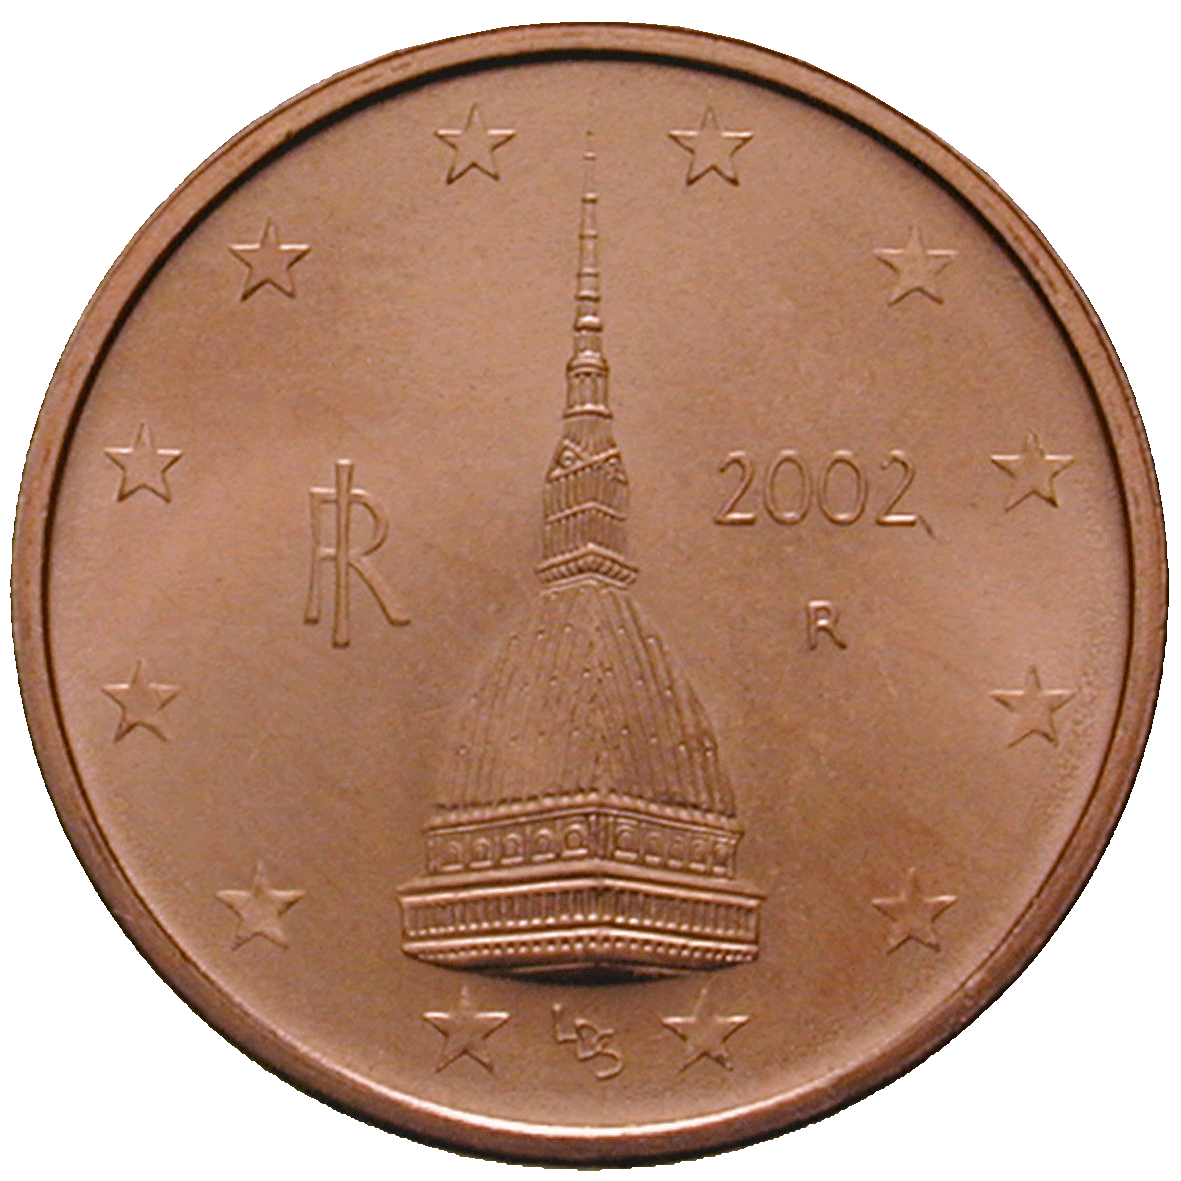 Republik Italien, 2 Eurocent 2002 (obverse)